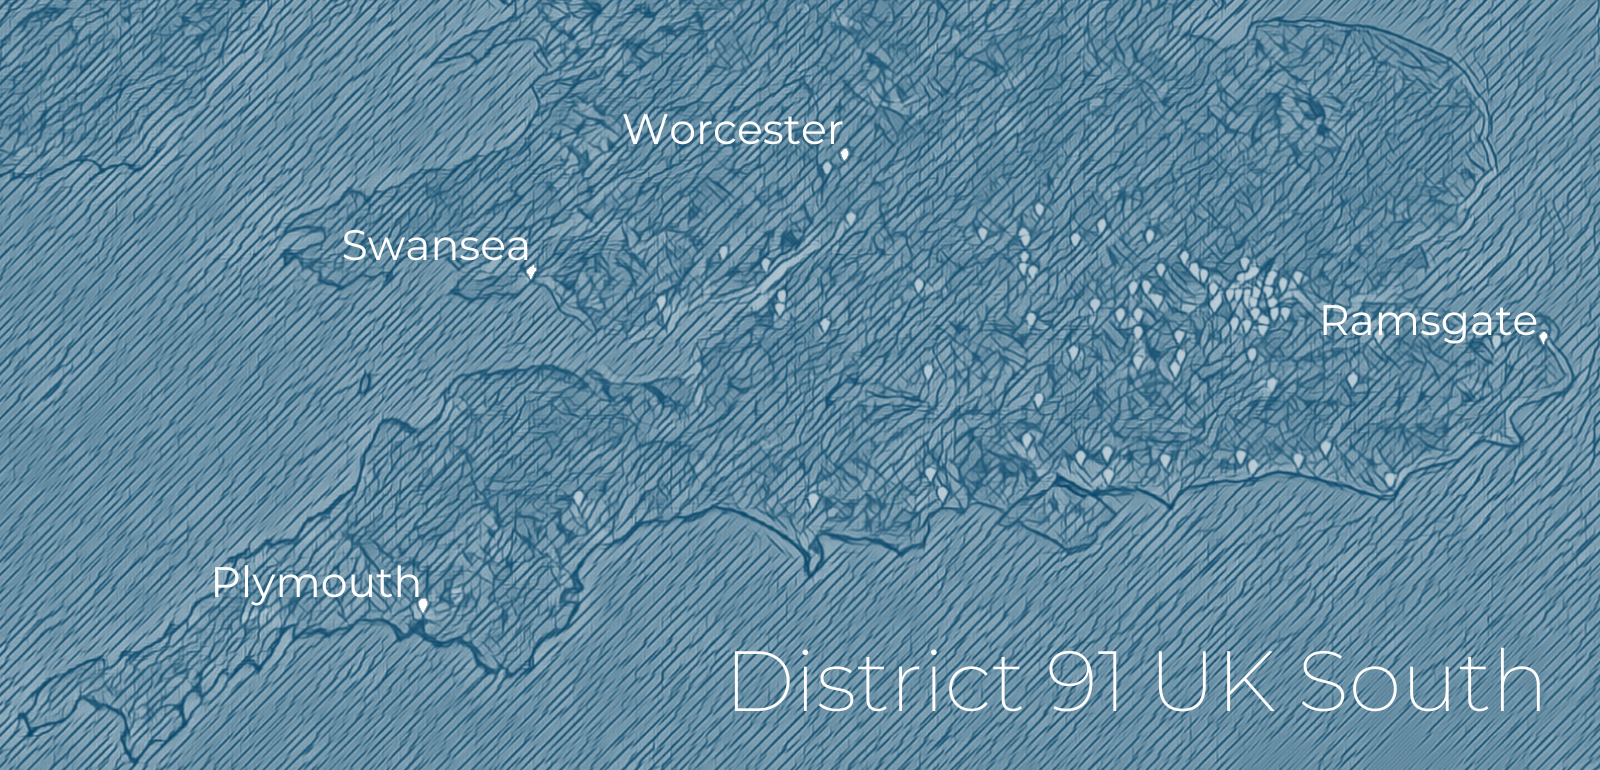 District 91 UK South